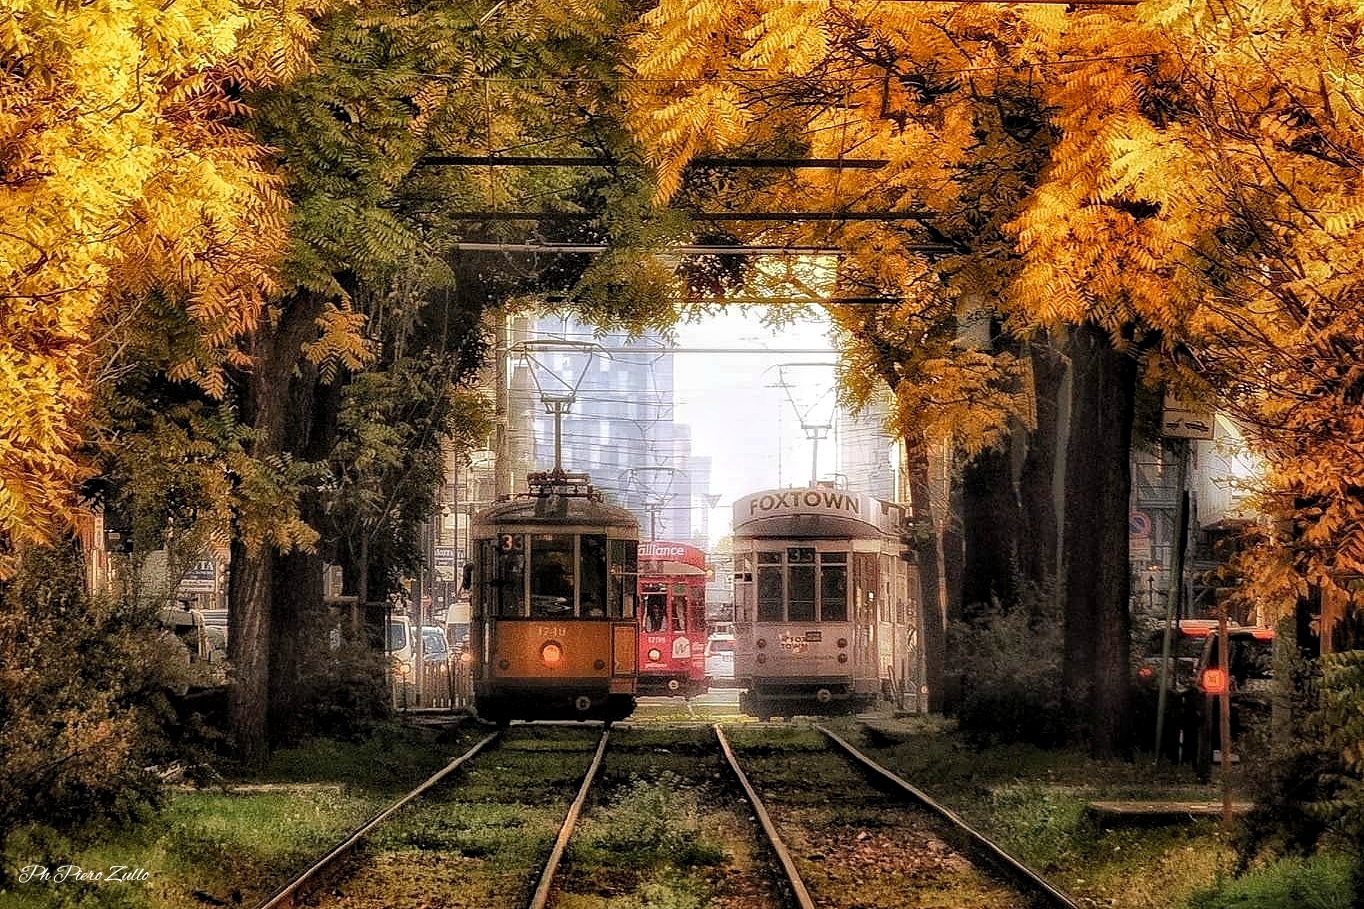 Autumn in Milan...